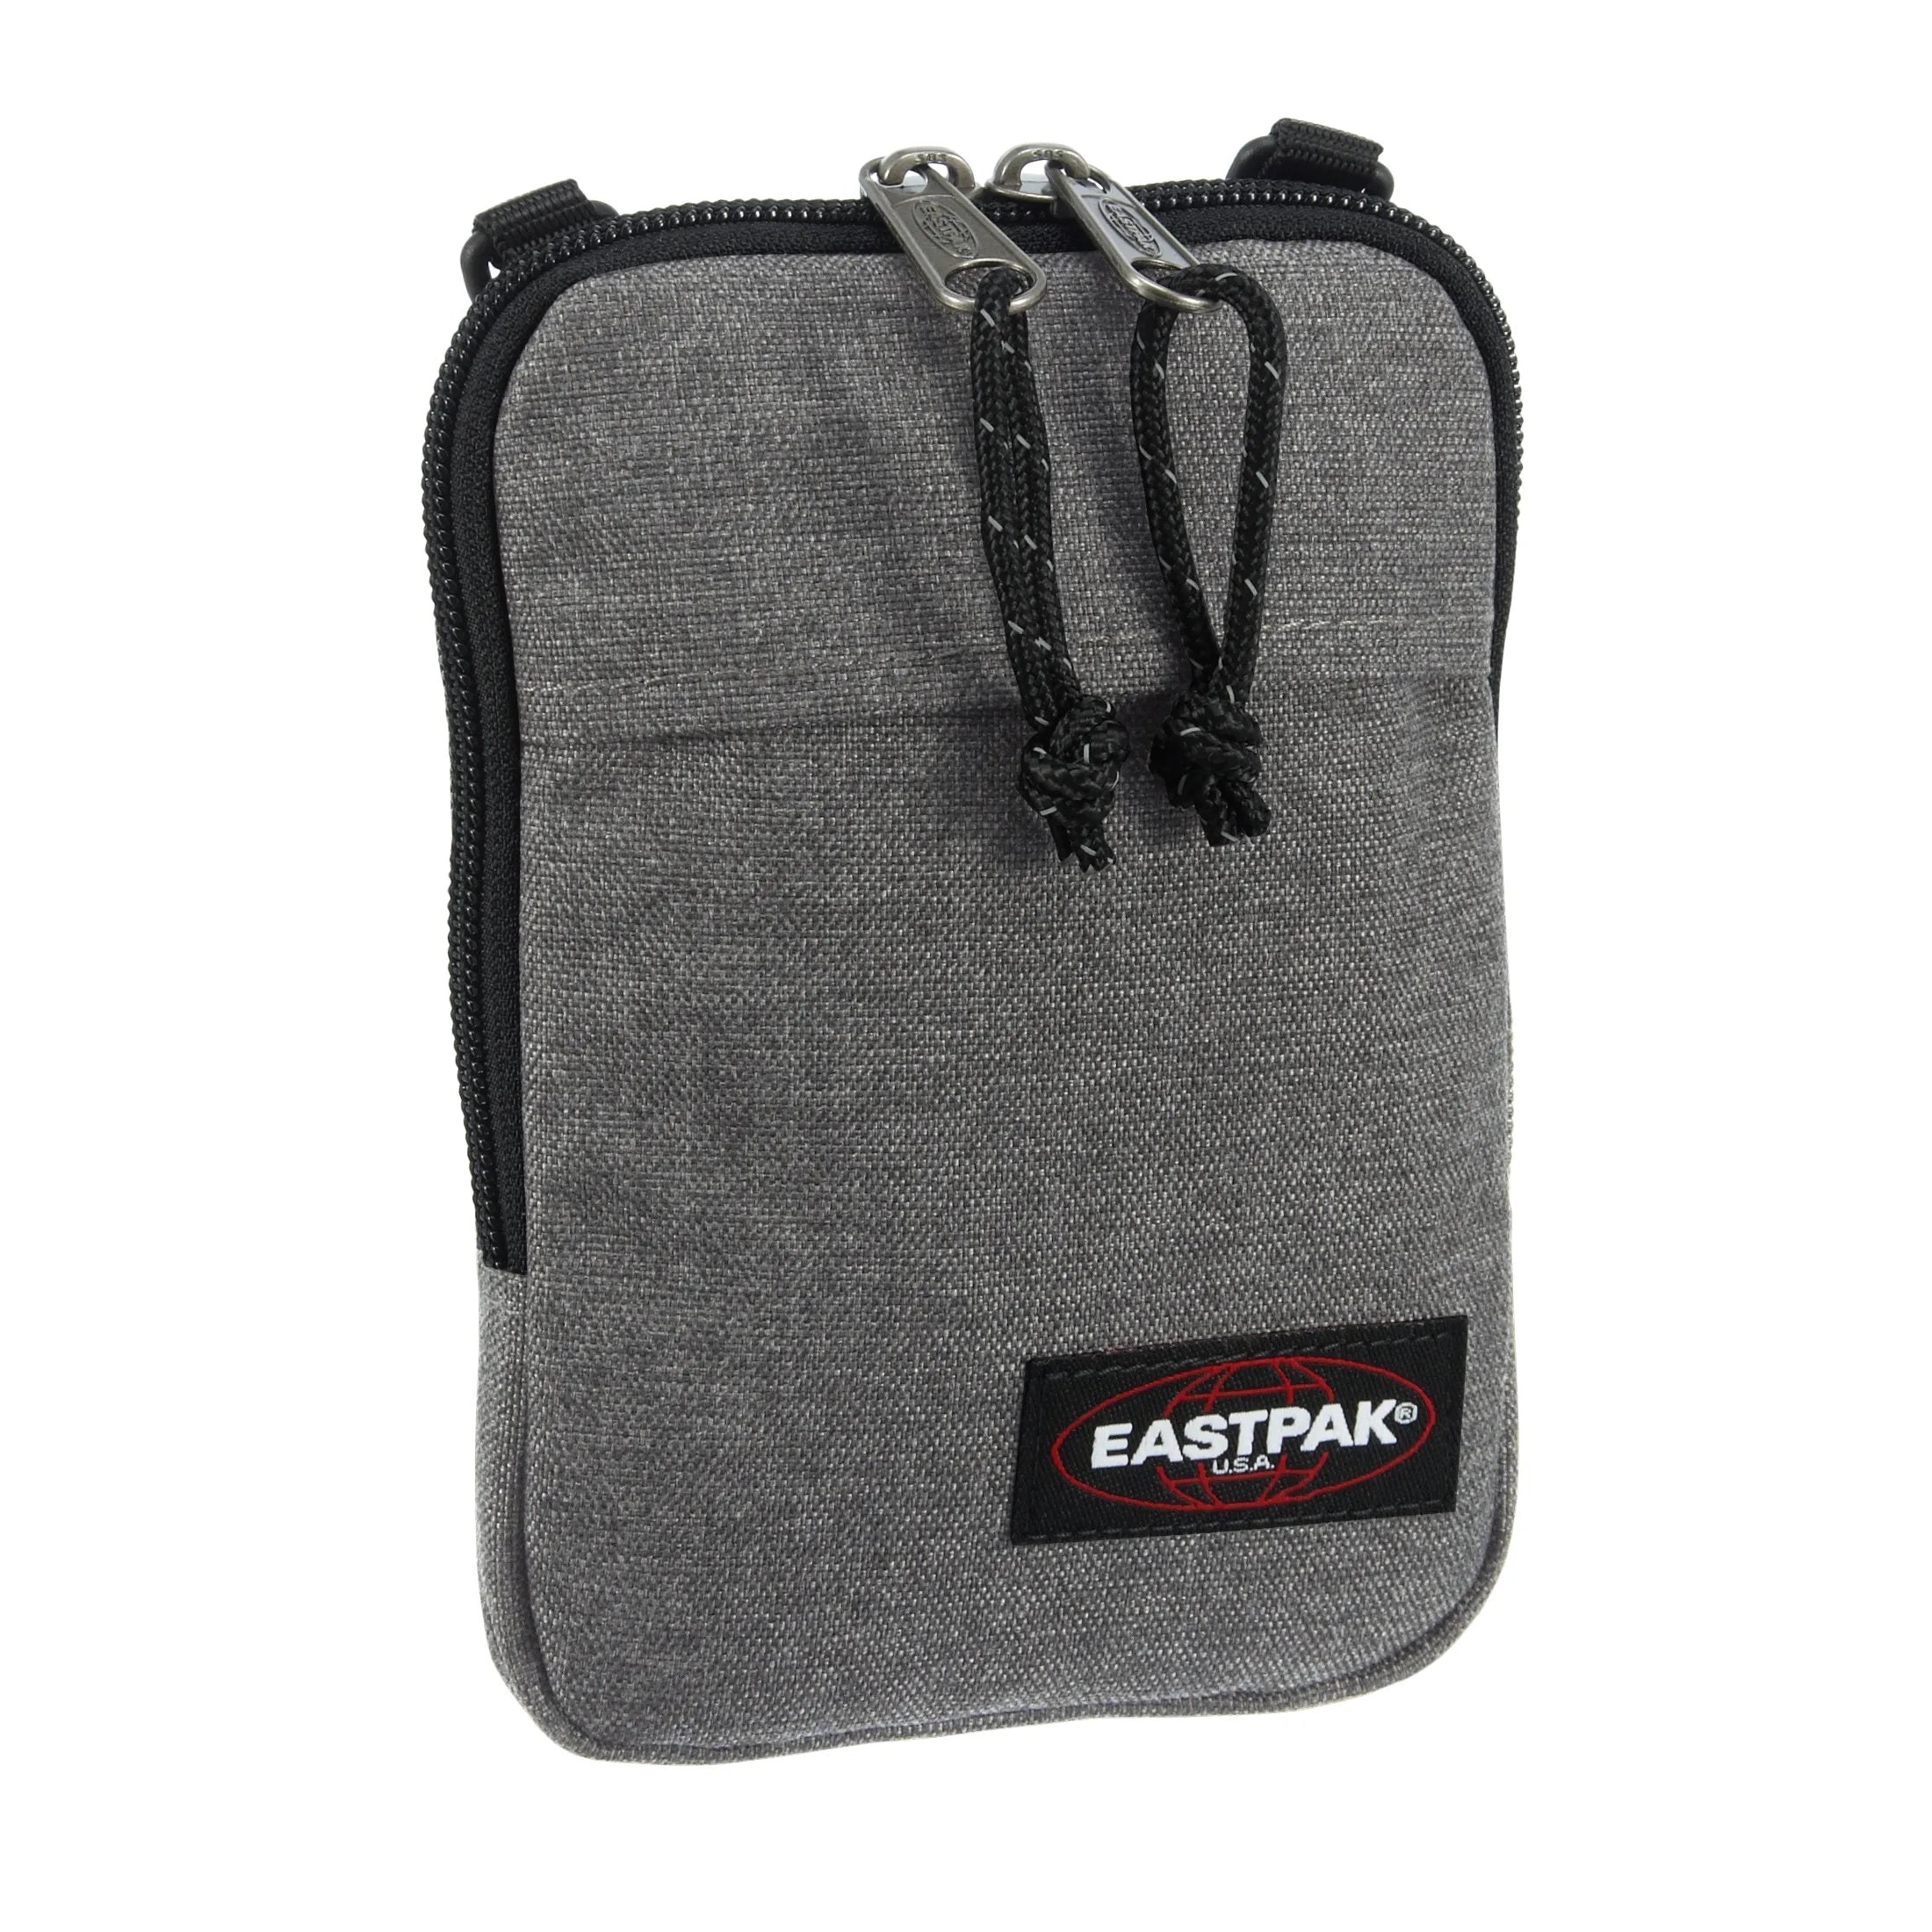 Eastpak Authentic Buddy youth bag 18 cm - sunday gray